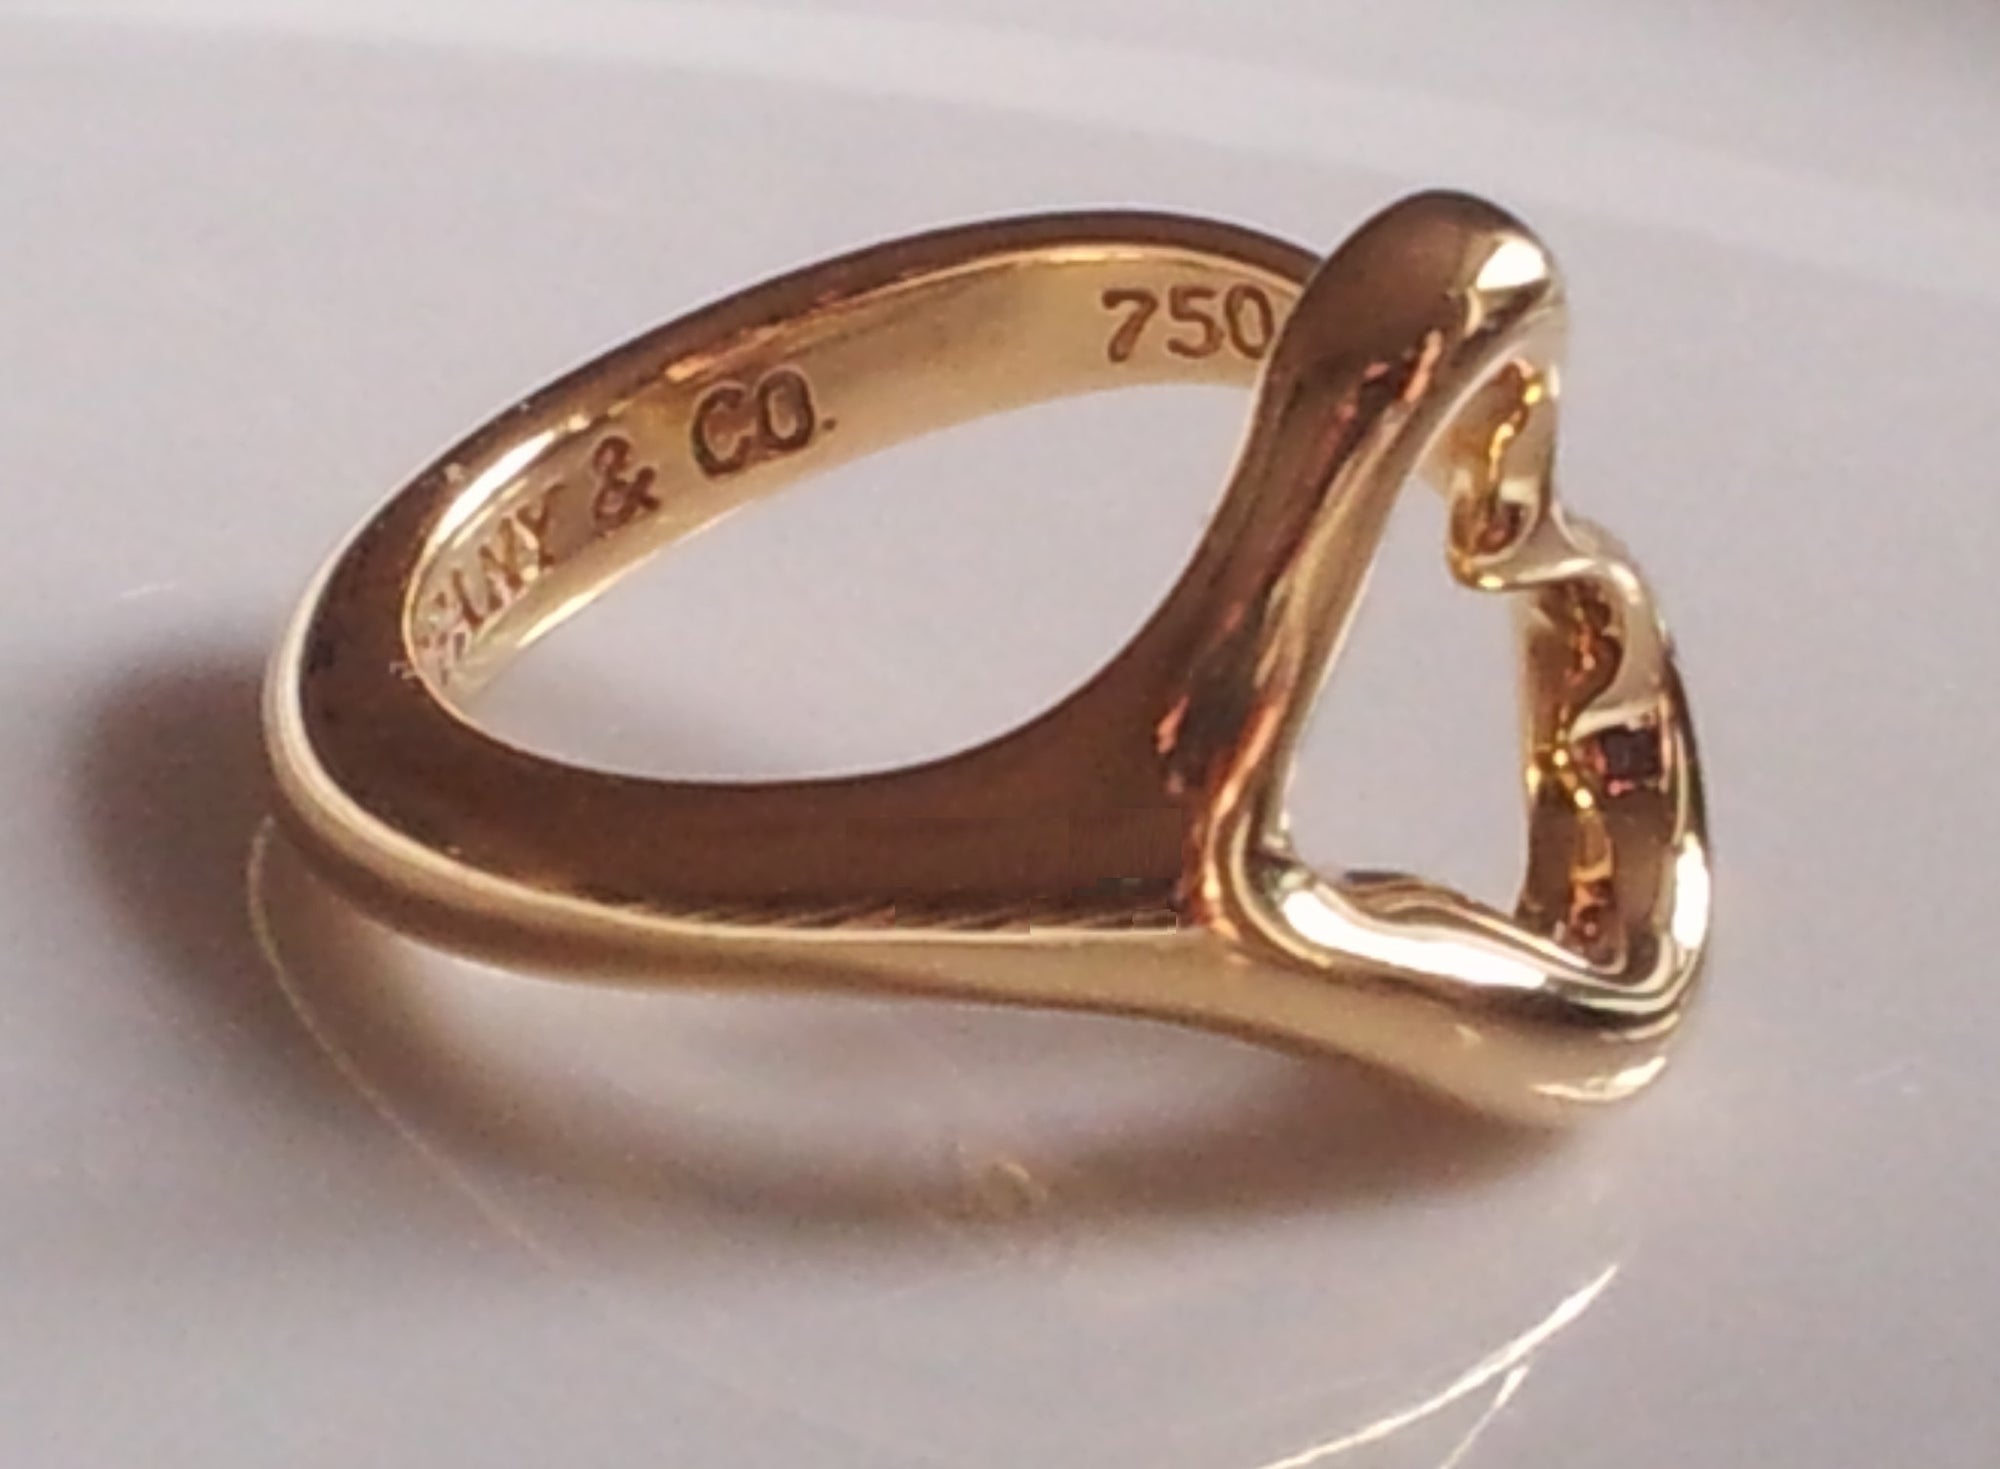 Tiffany & Co. Open Heart Ring by Elsa Peretti in 18K Yellow Gold. Size K-M